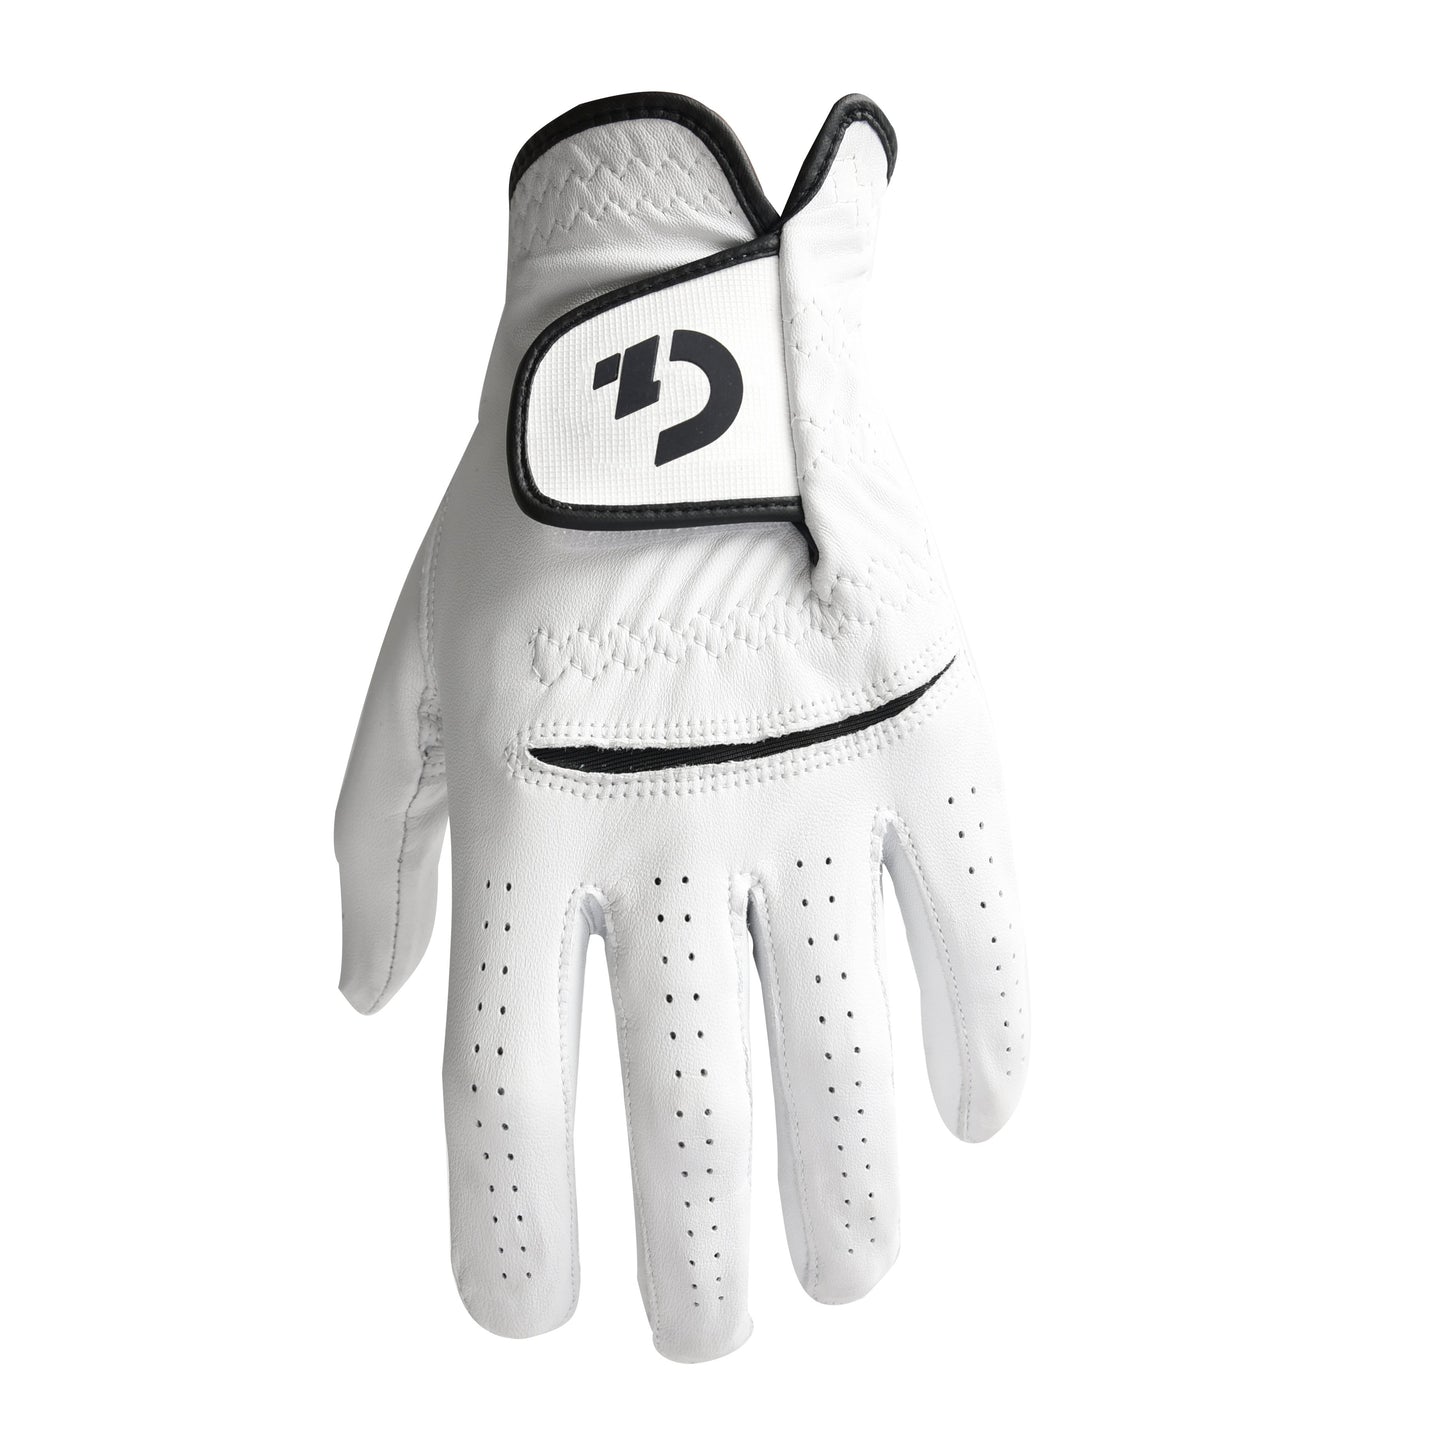 GnL Recsports Women’s Premium Tour Soft Glove Left Hand 3 Pack